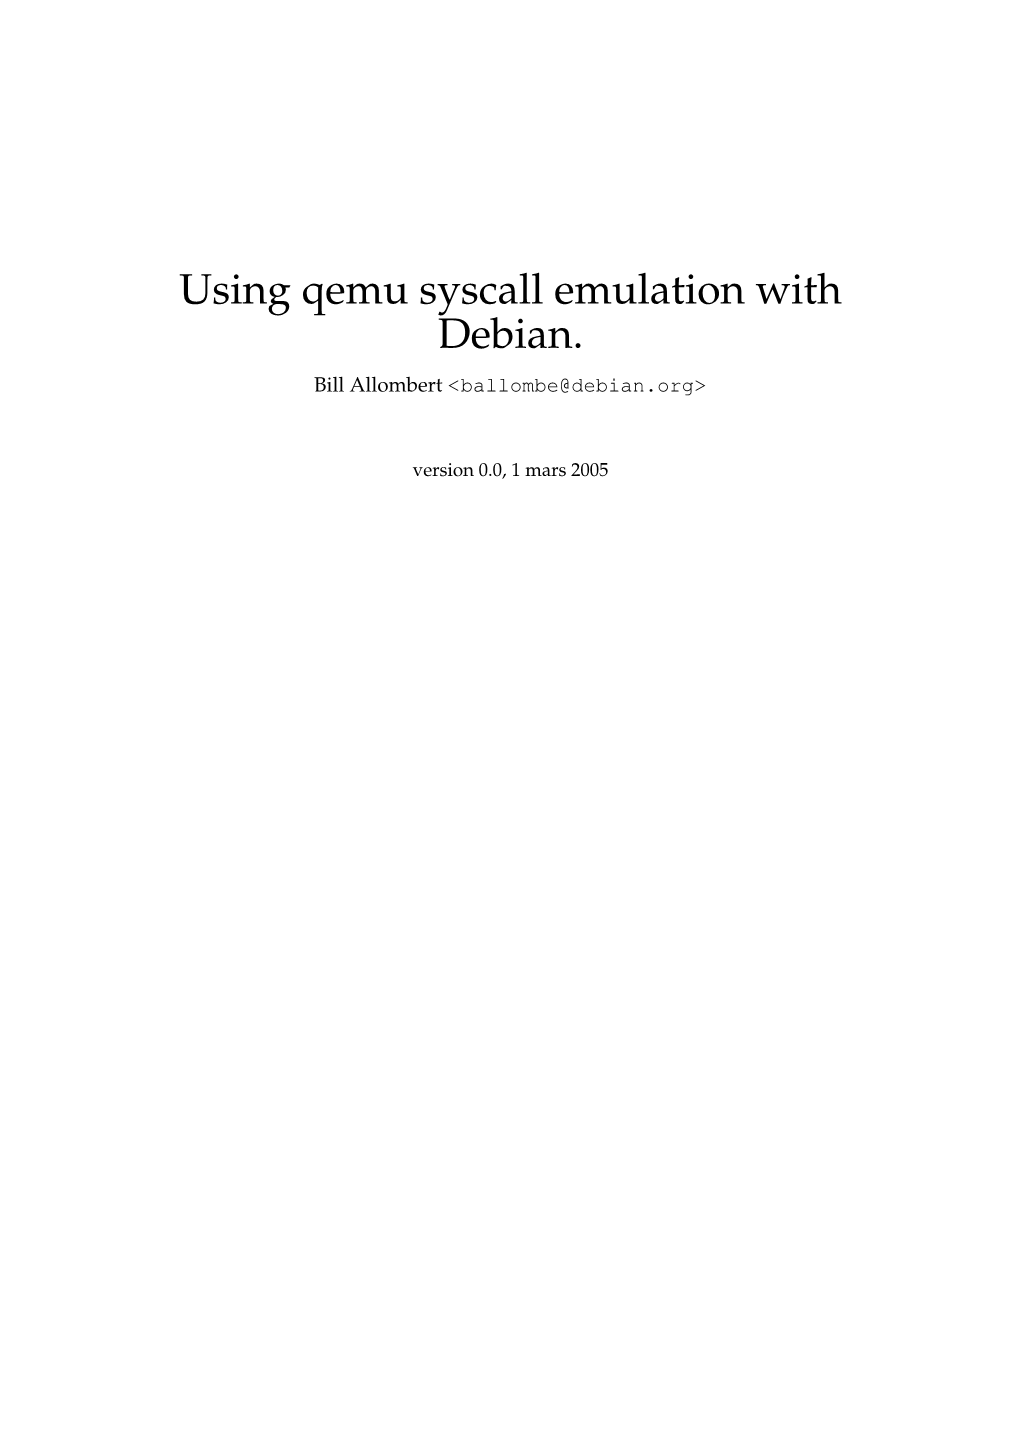 Using Qemu Syscall Emulation with Debian